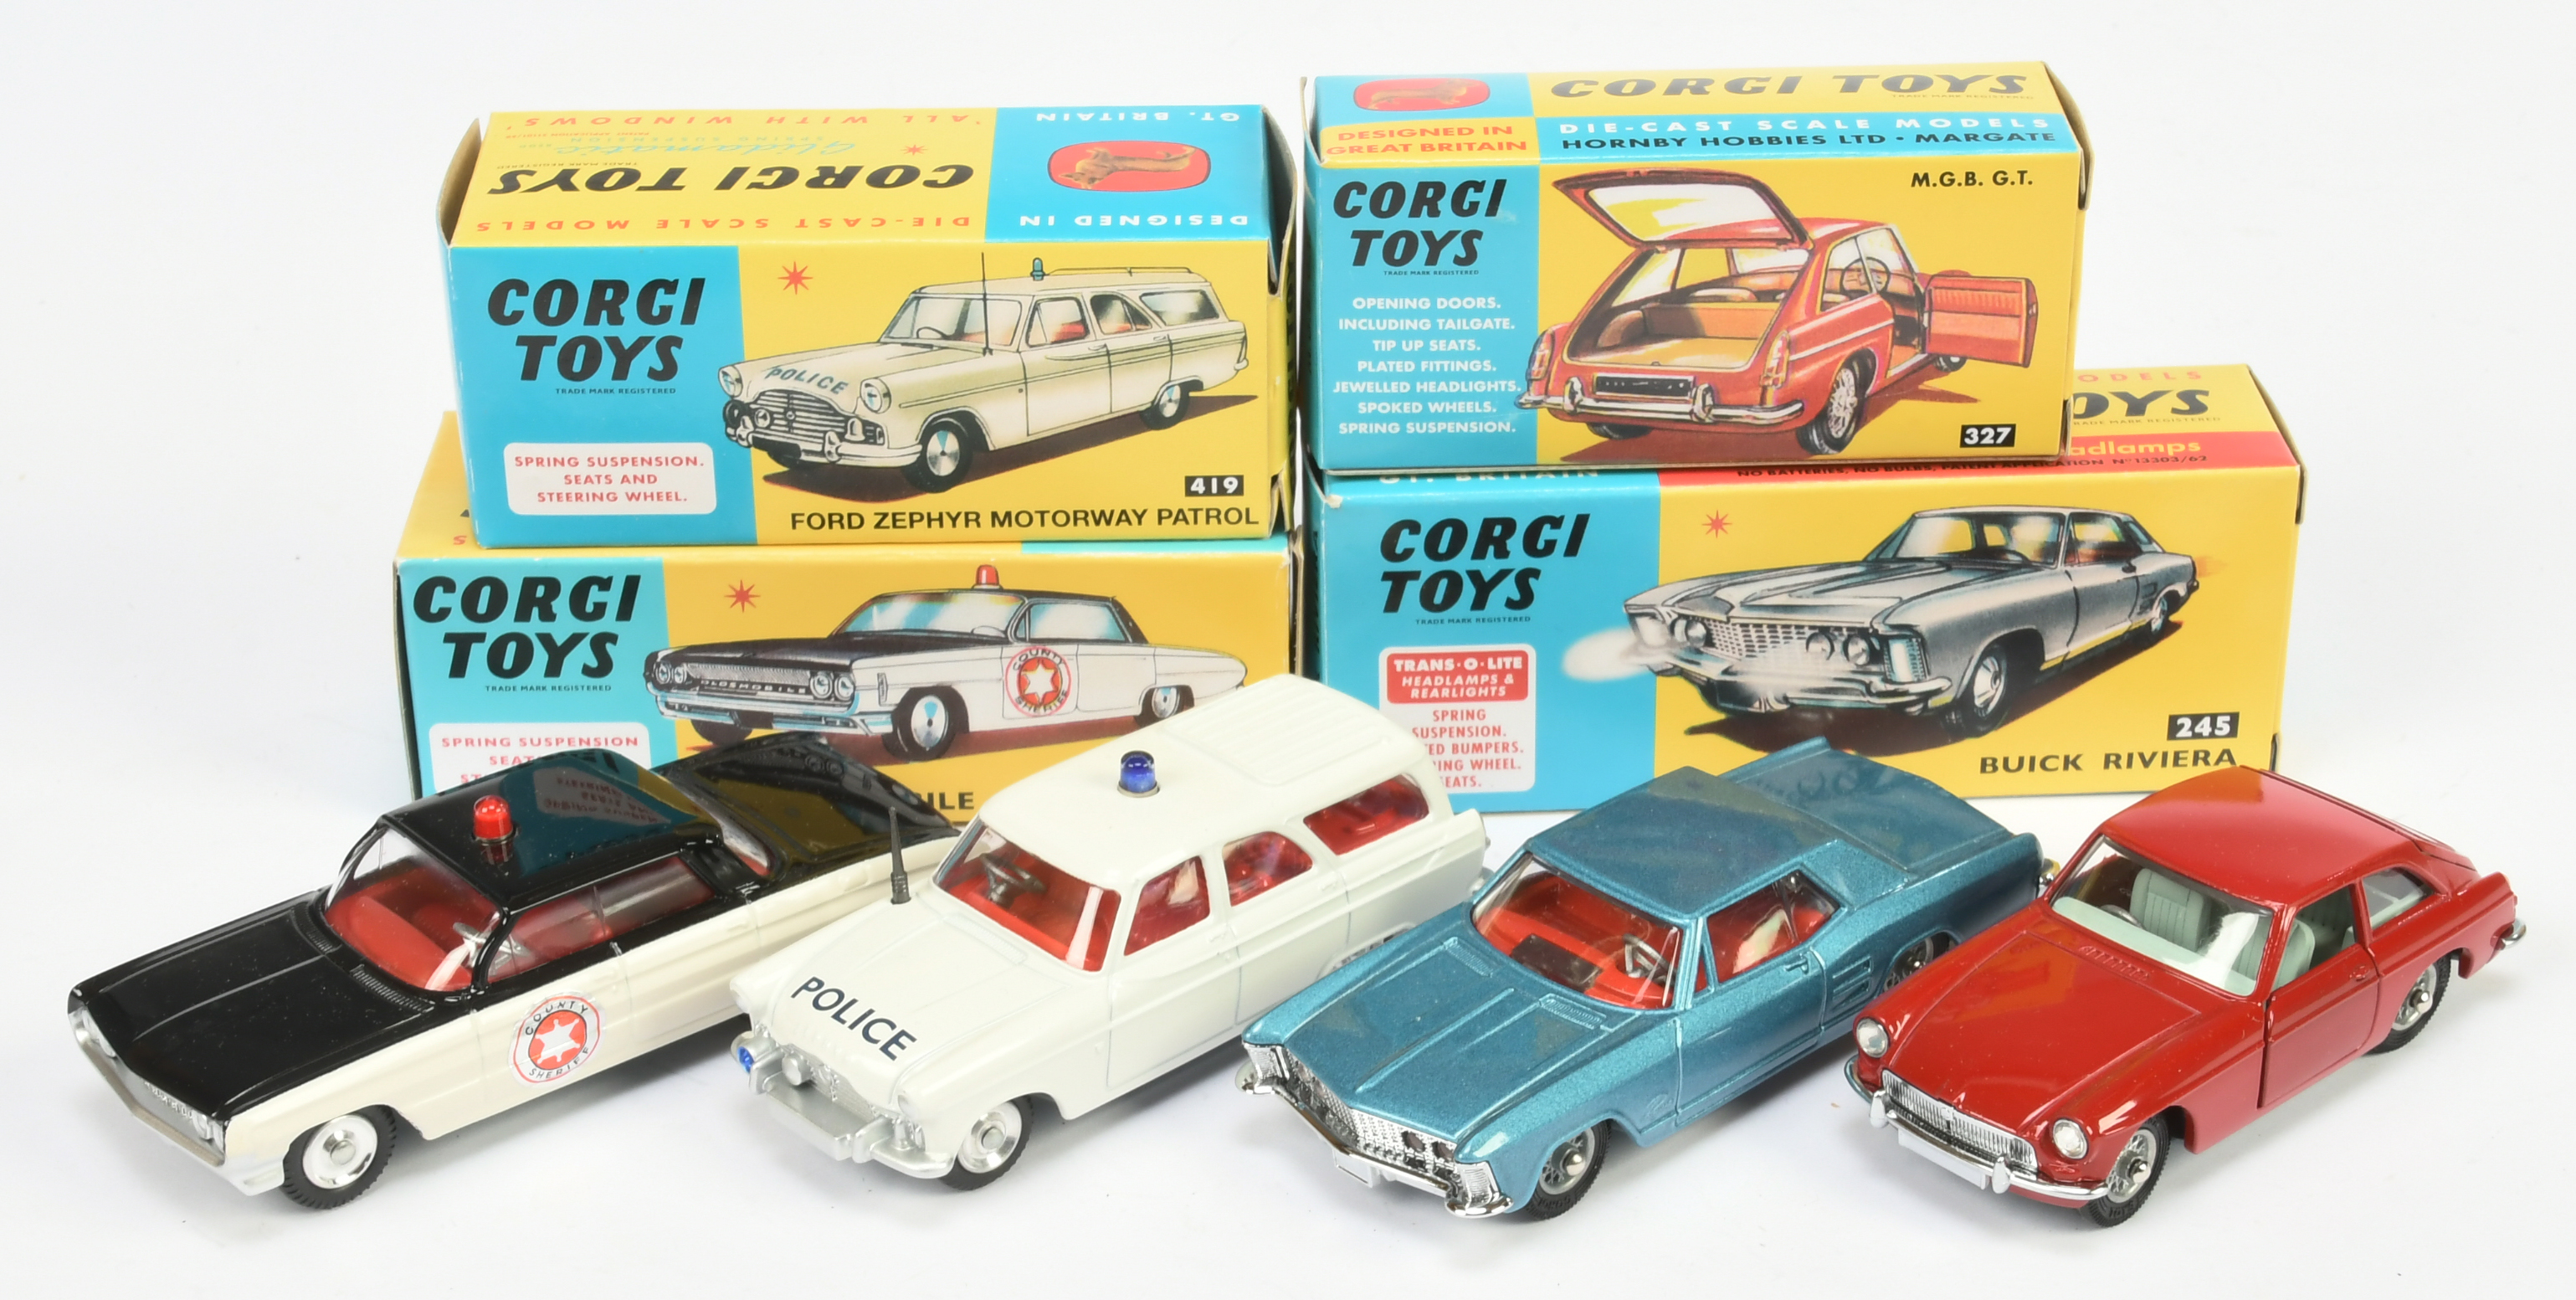 Corgi Toys Group Of 4 - (1) 237 Oldsmobile "County Sheriff" Car, (2) 245 Buick Rivera, (3) 327 MG...